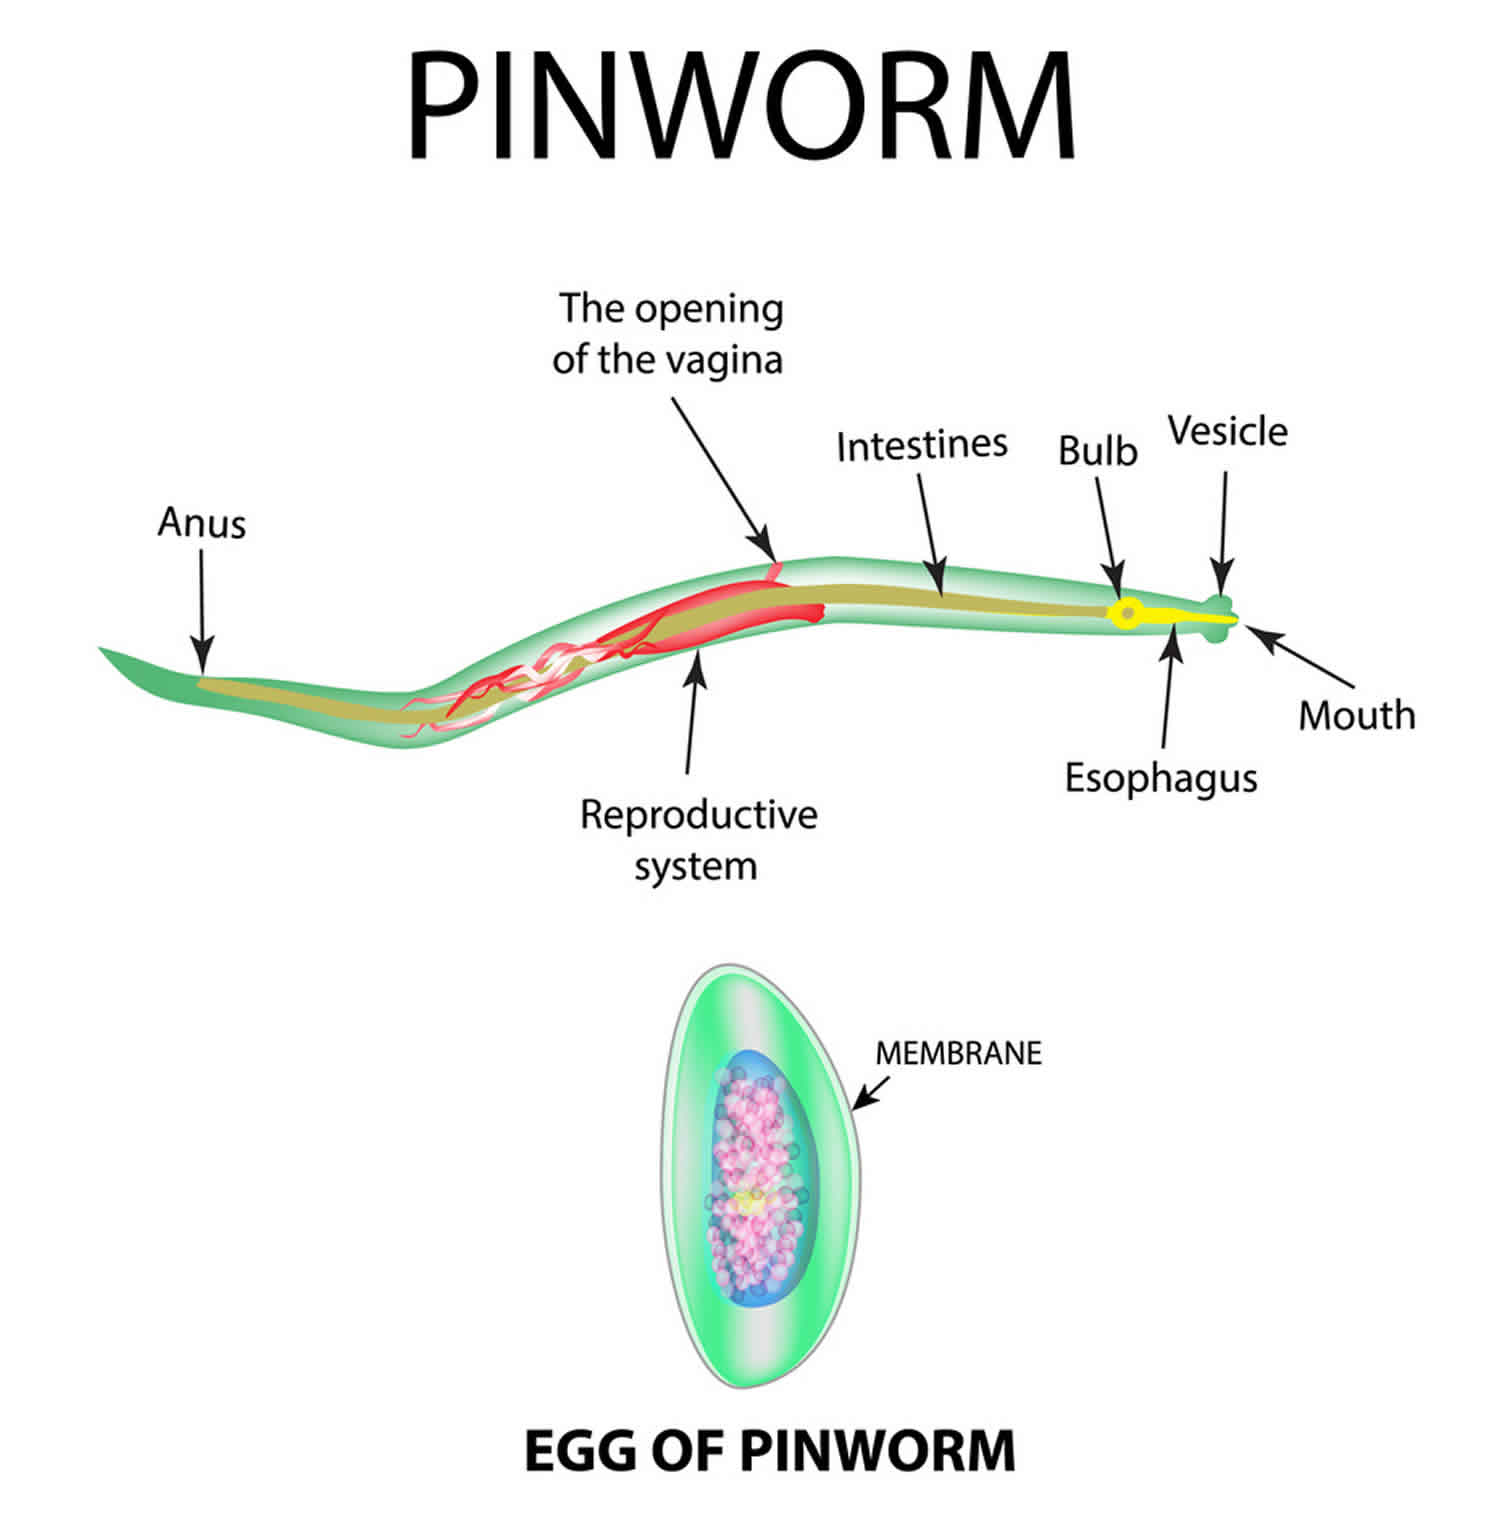 Mit jelent a pinworms?